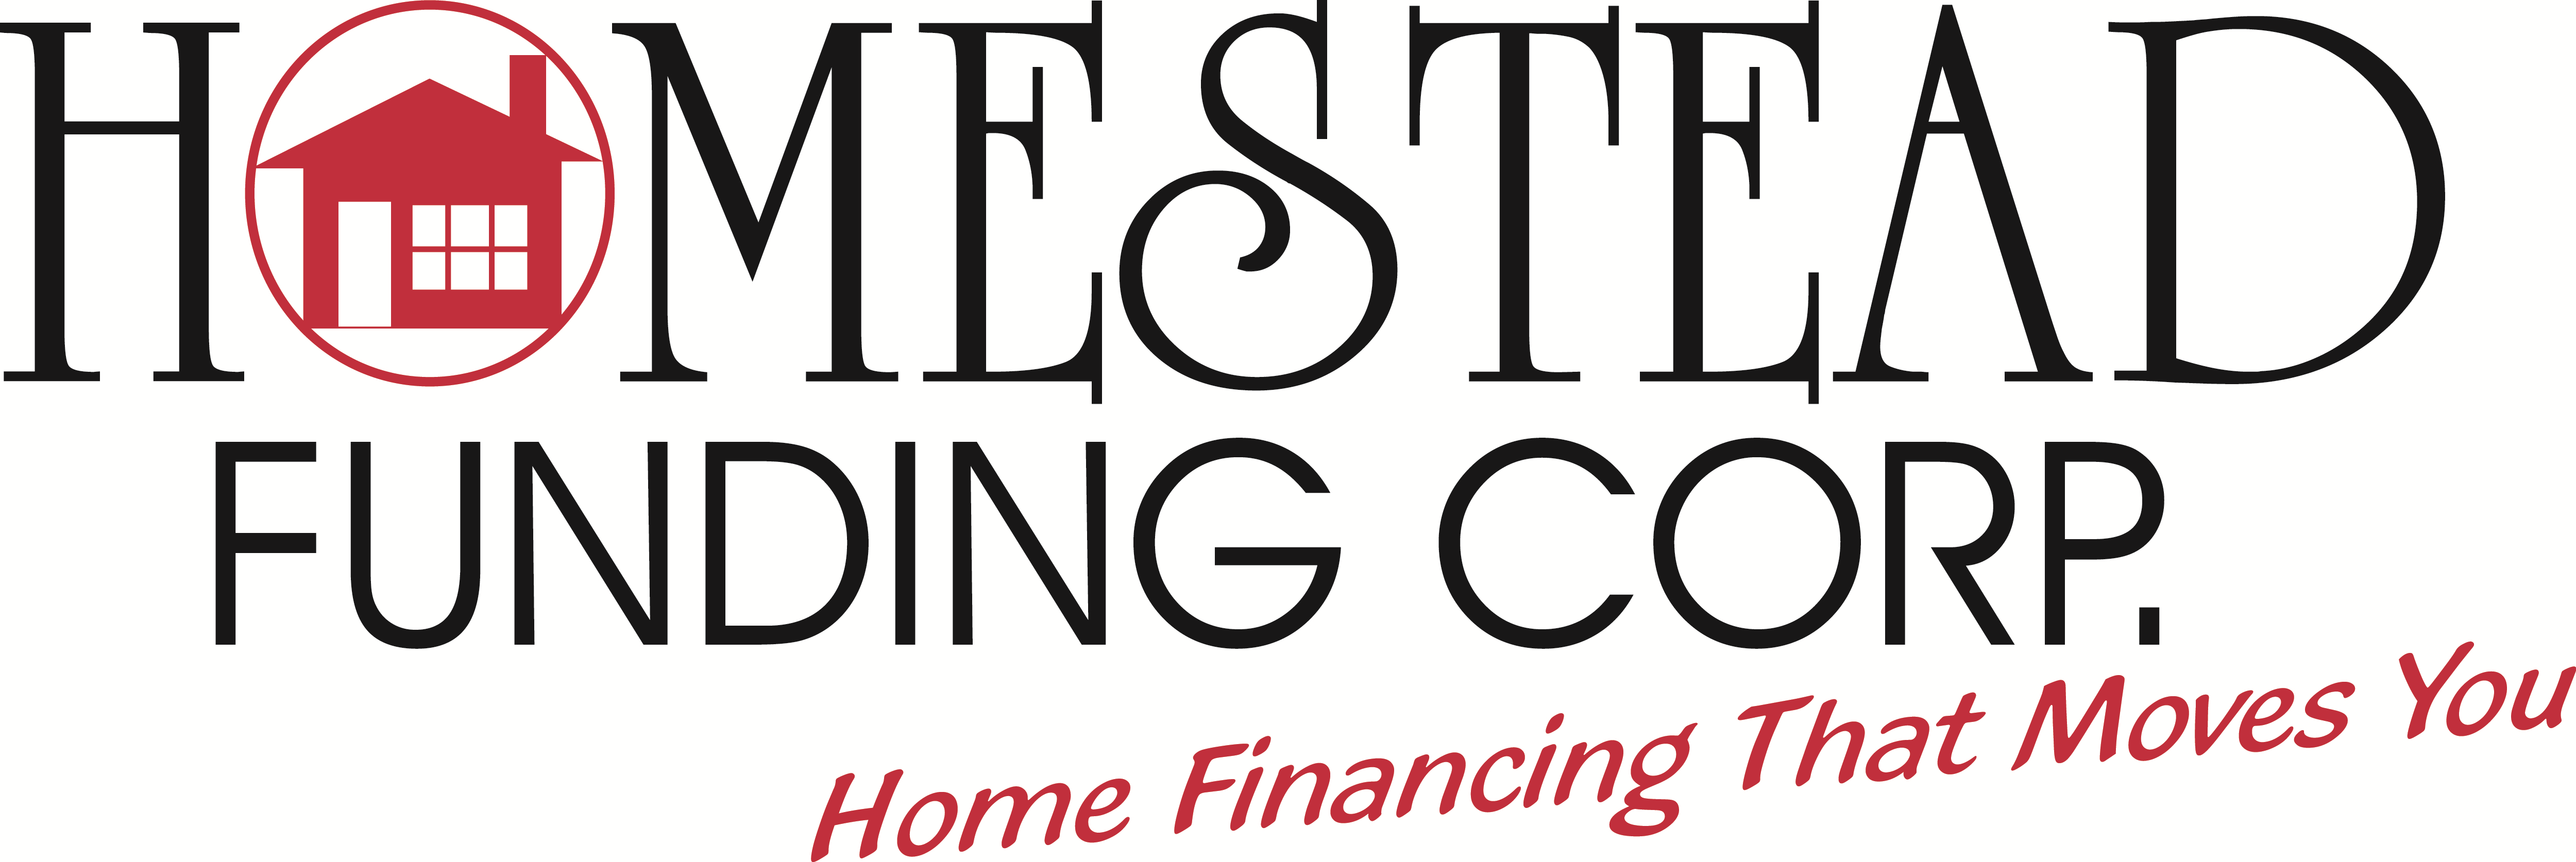 Homestead Funding Corp Company Logo